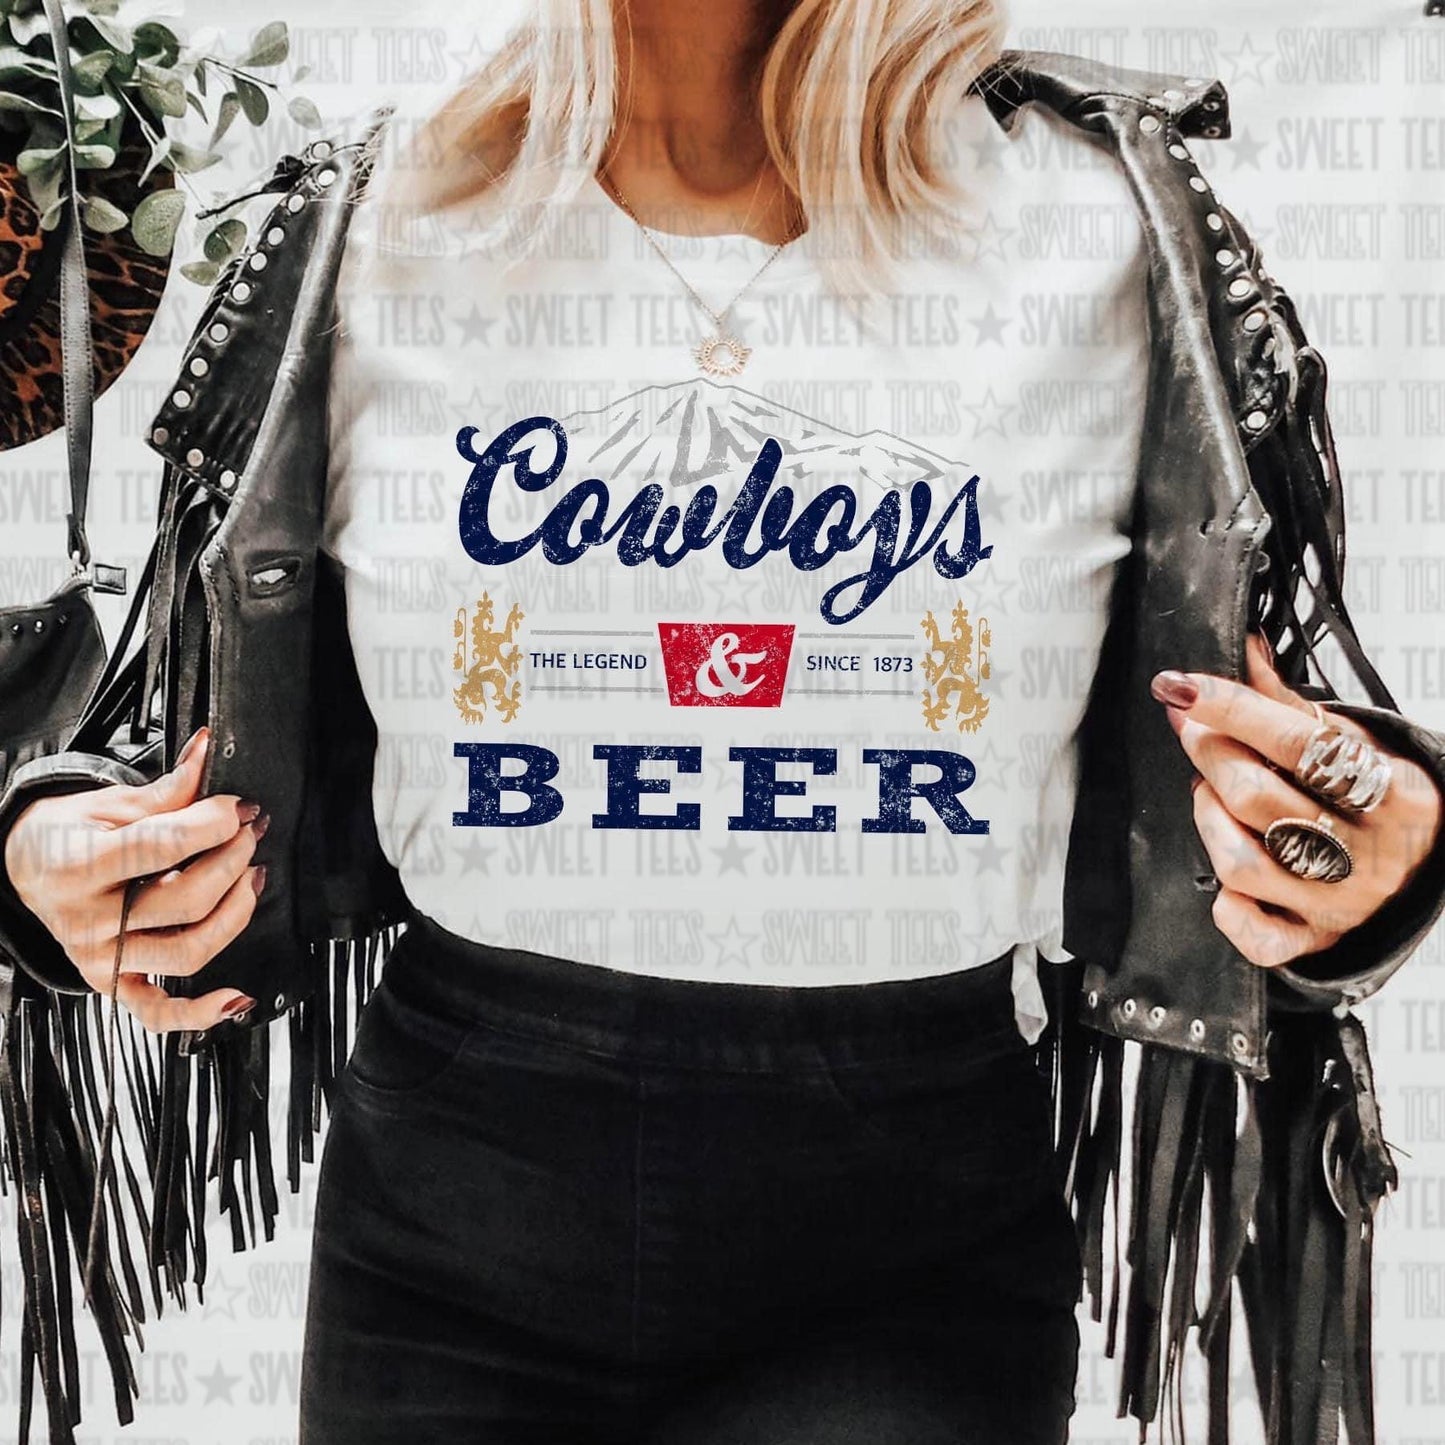 Cowboys and Beer tee